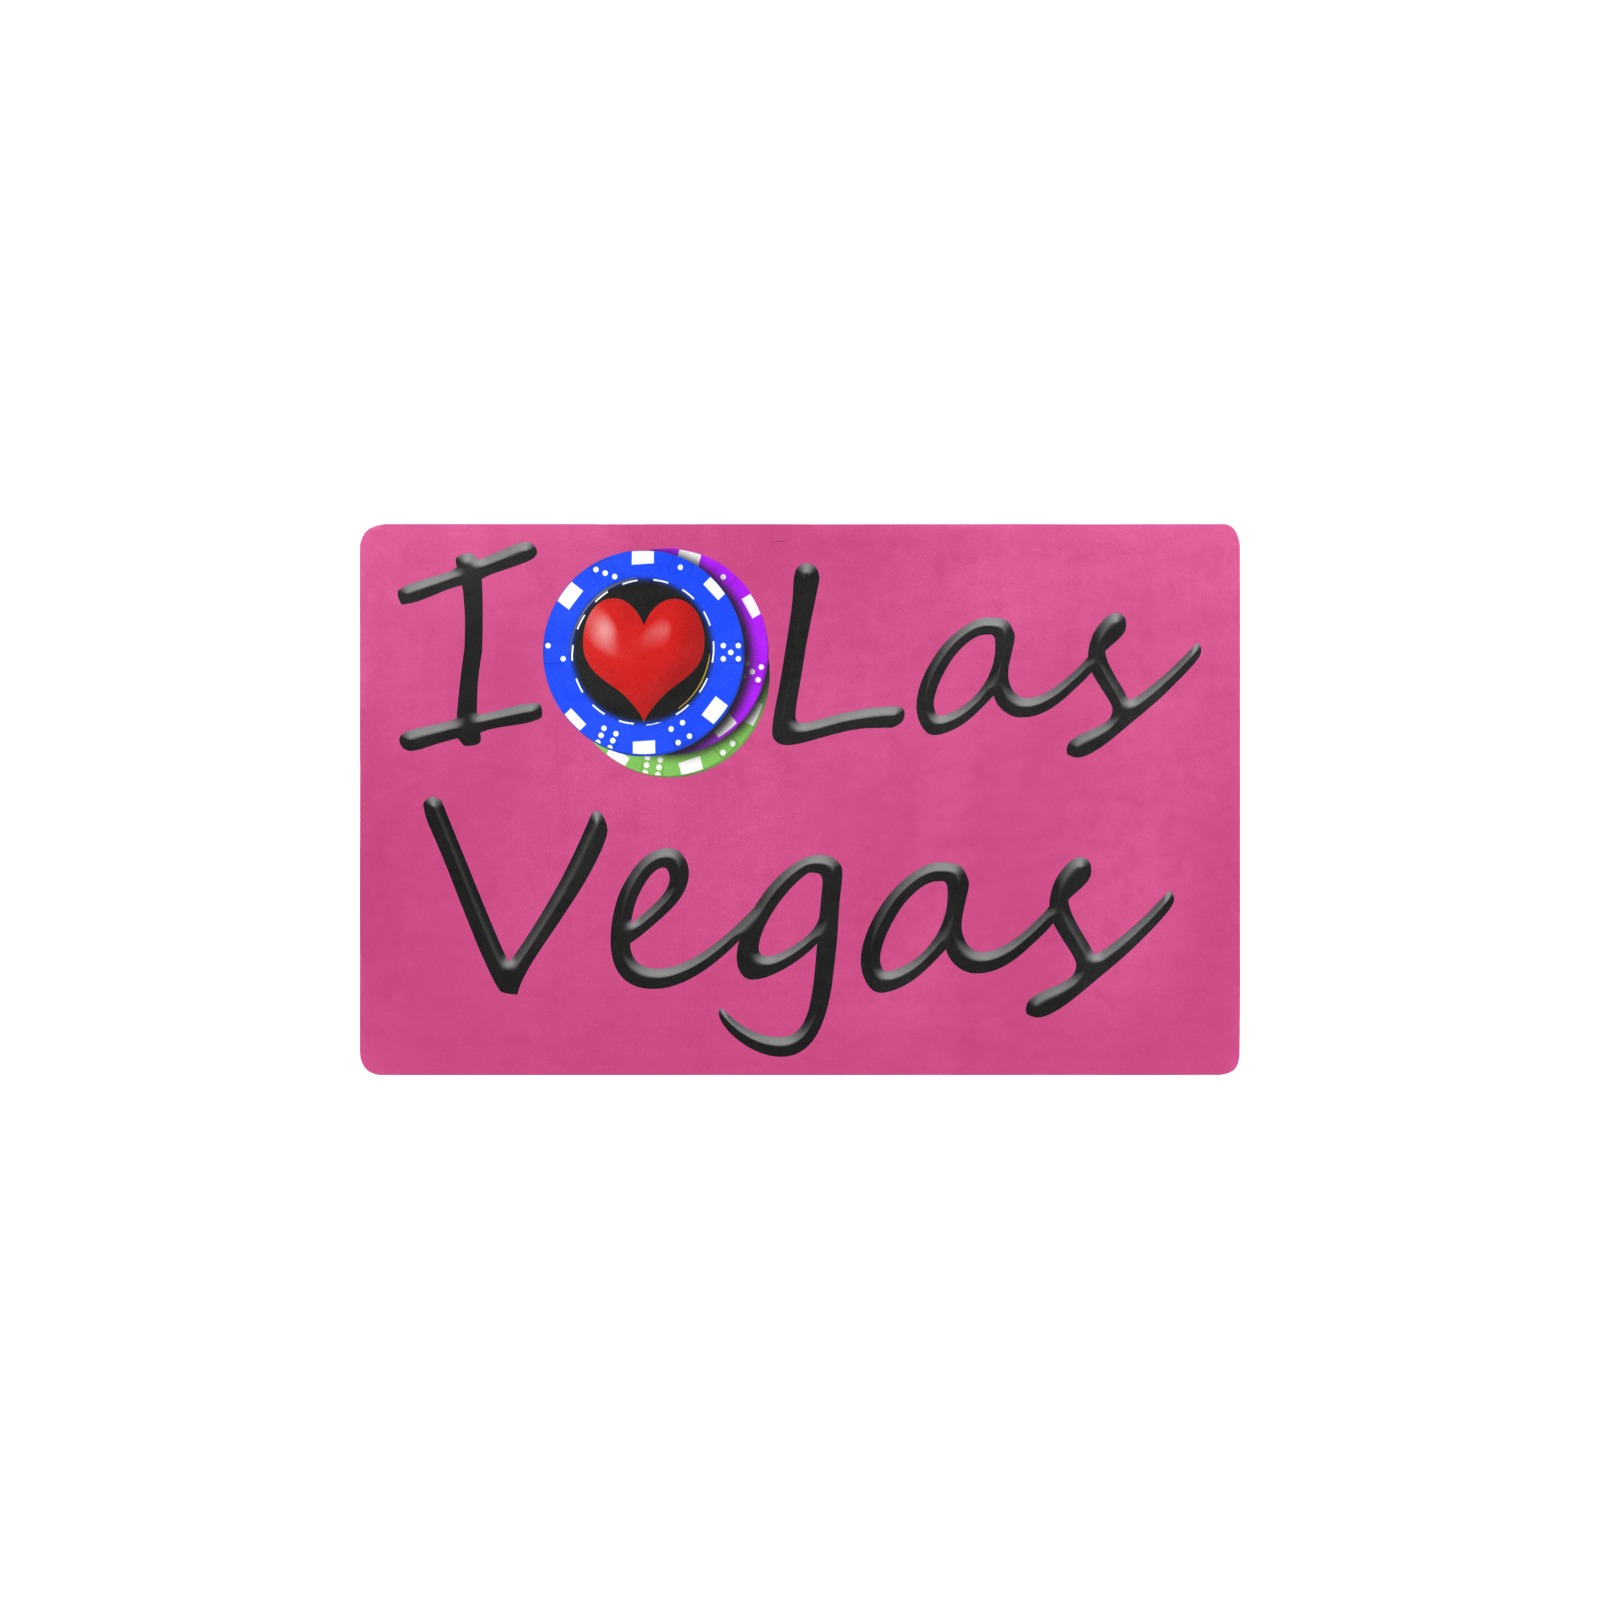 I Love Las Vegas / Pink Kitchen Mat 28"x17"